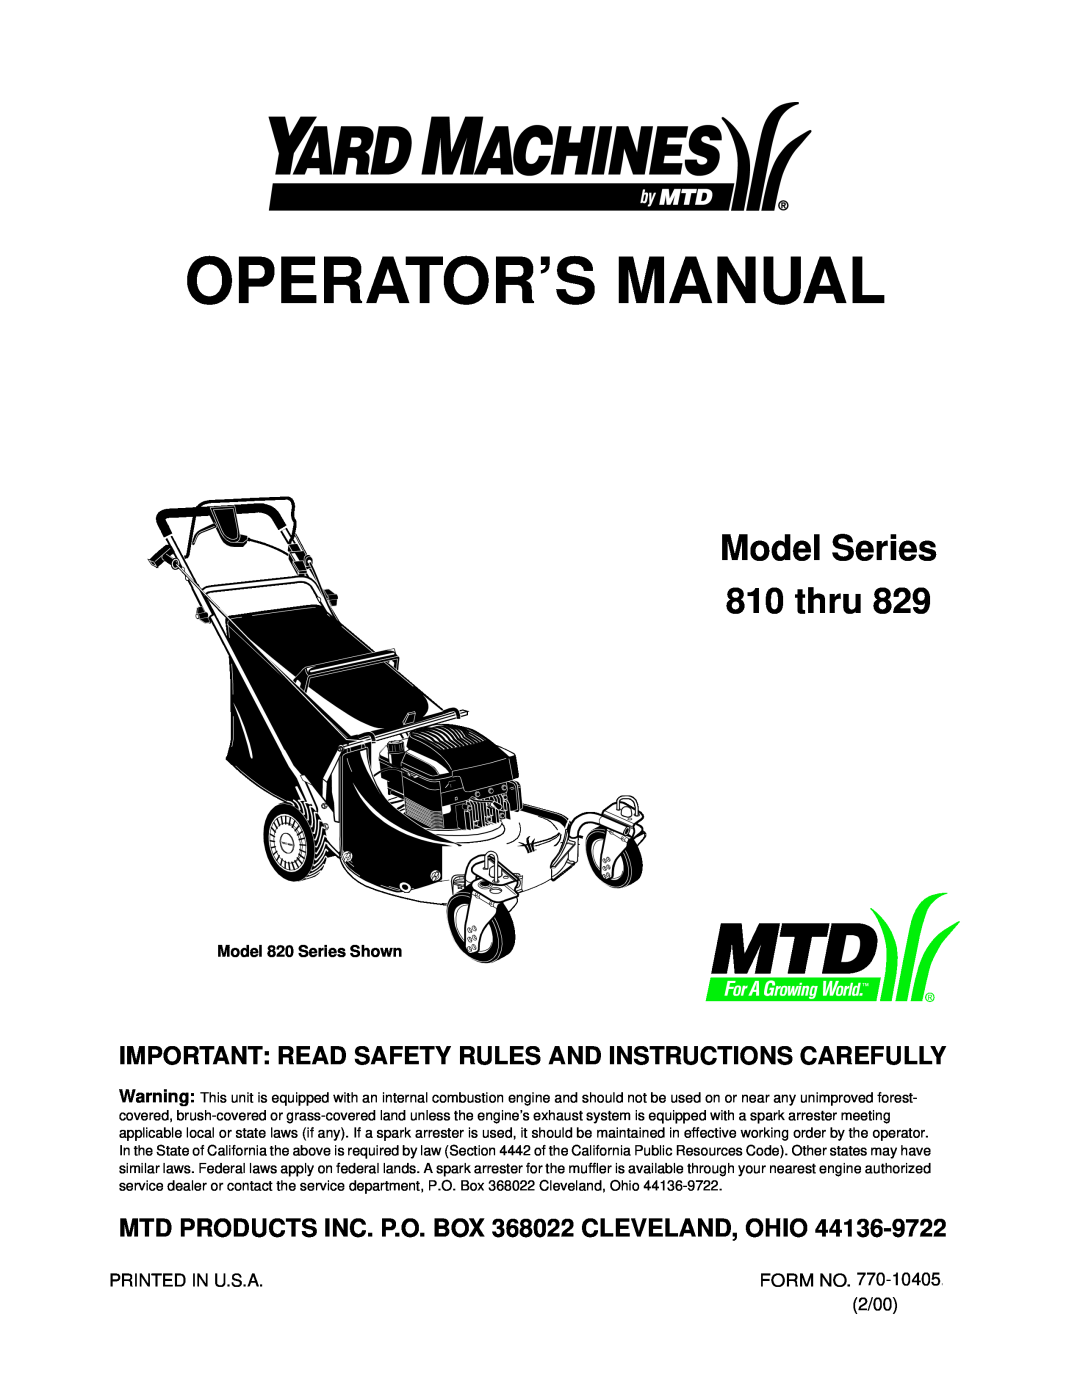 Yard Machines 829 manual MTD PRODUCTS INC. P.O. BOX 368022 CLEVELAND, OHIO, Operator’S Manual, Model Series 810 thru 